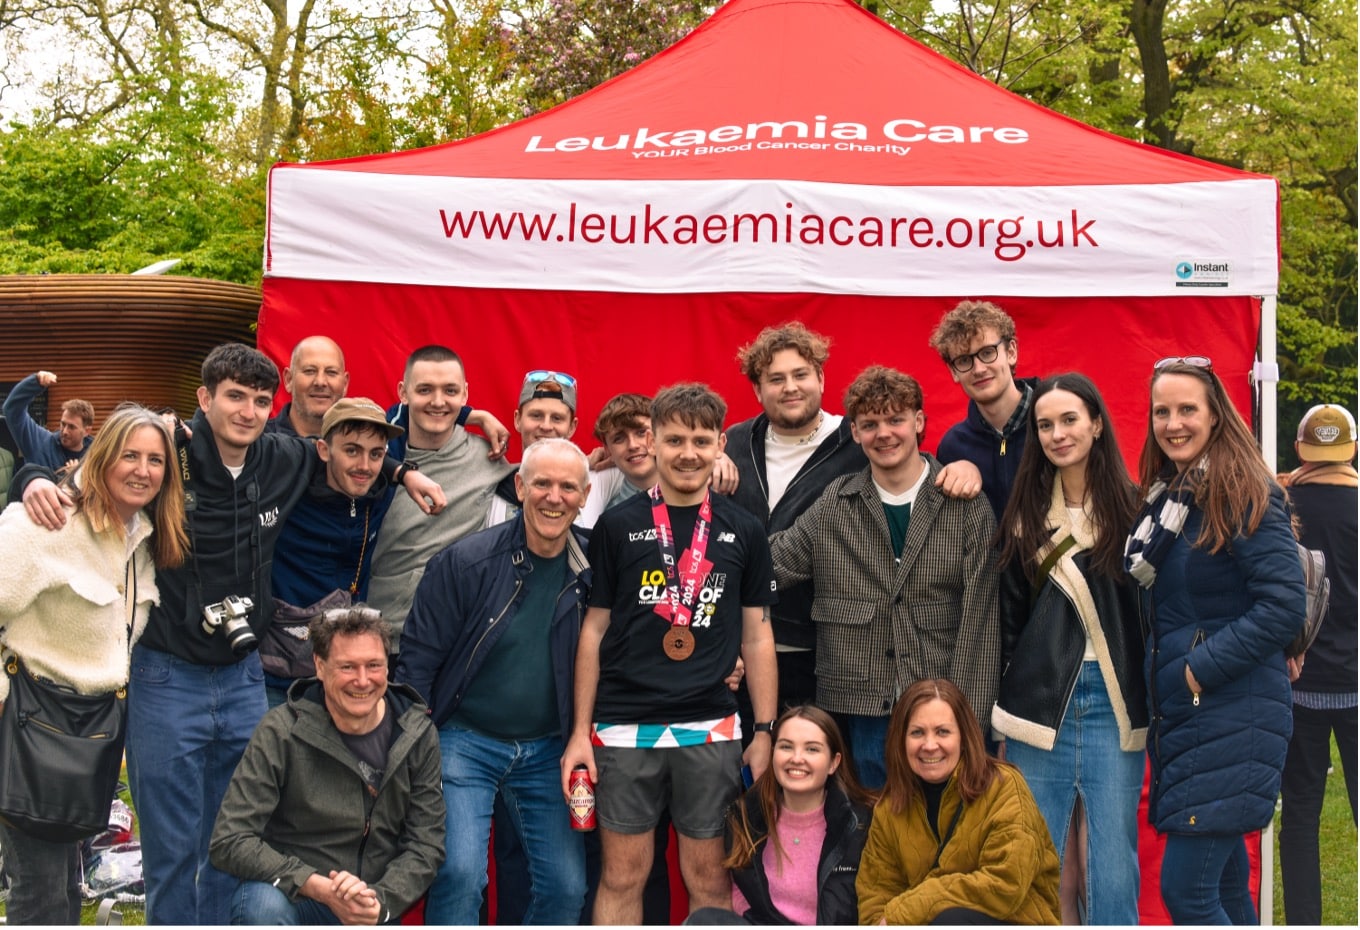 Image showing Leukaemia Care team and fundraiser at Leukaemia Care tent set up at London Marathon.